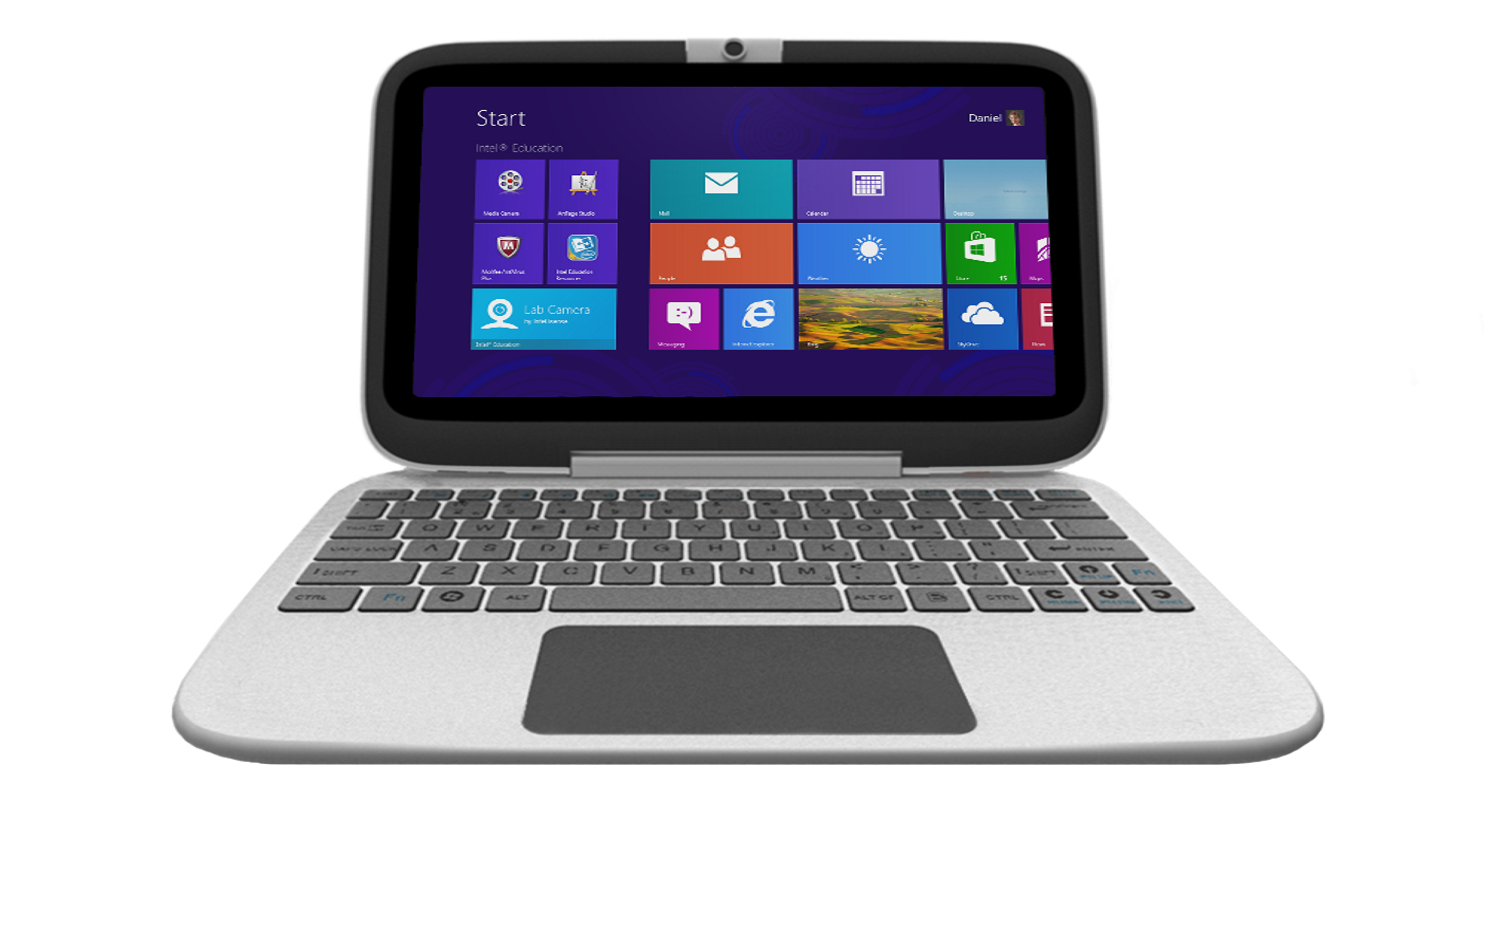 Aquarius cmp ns220. Intel classmate PC. Intel Education Tablet. Intel487sx. Intel classmate Tablet.